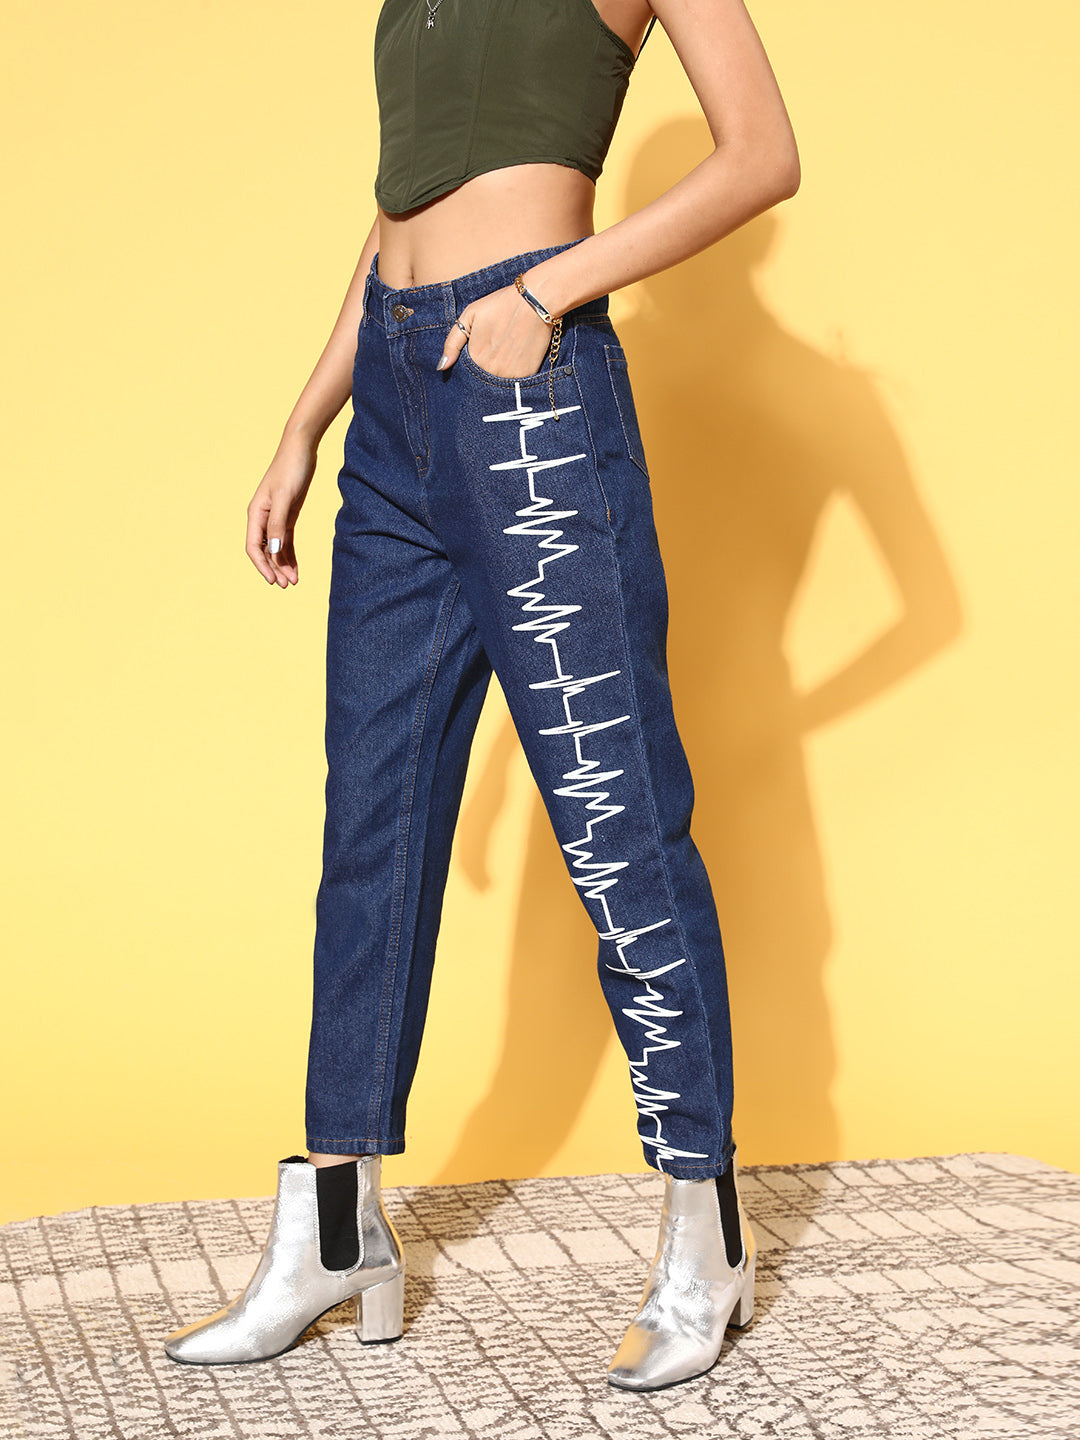 Buy Women Blue Heart-Beat Print Jeans Online at Sassafras